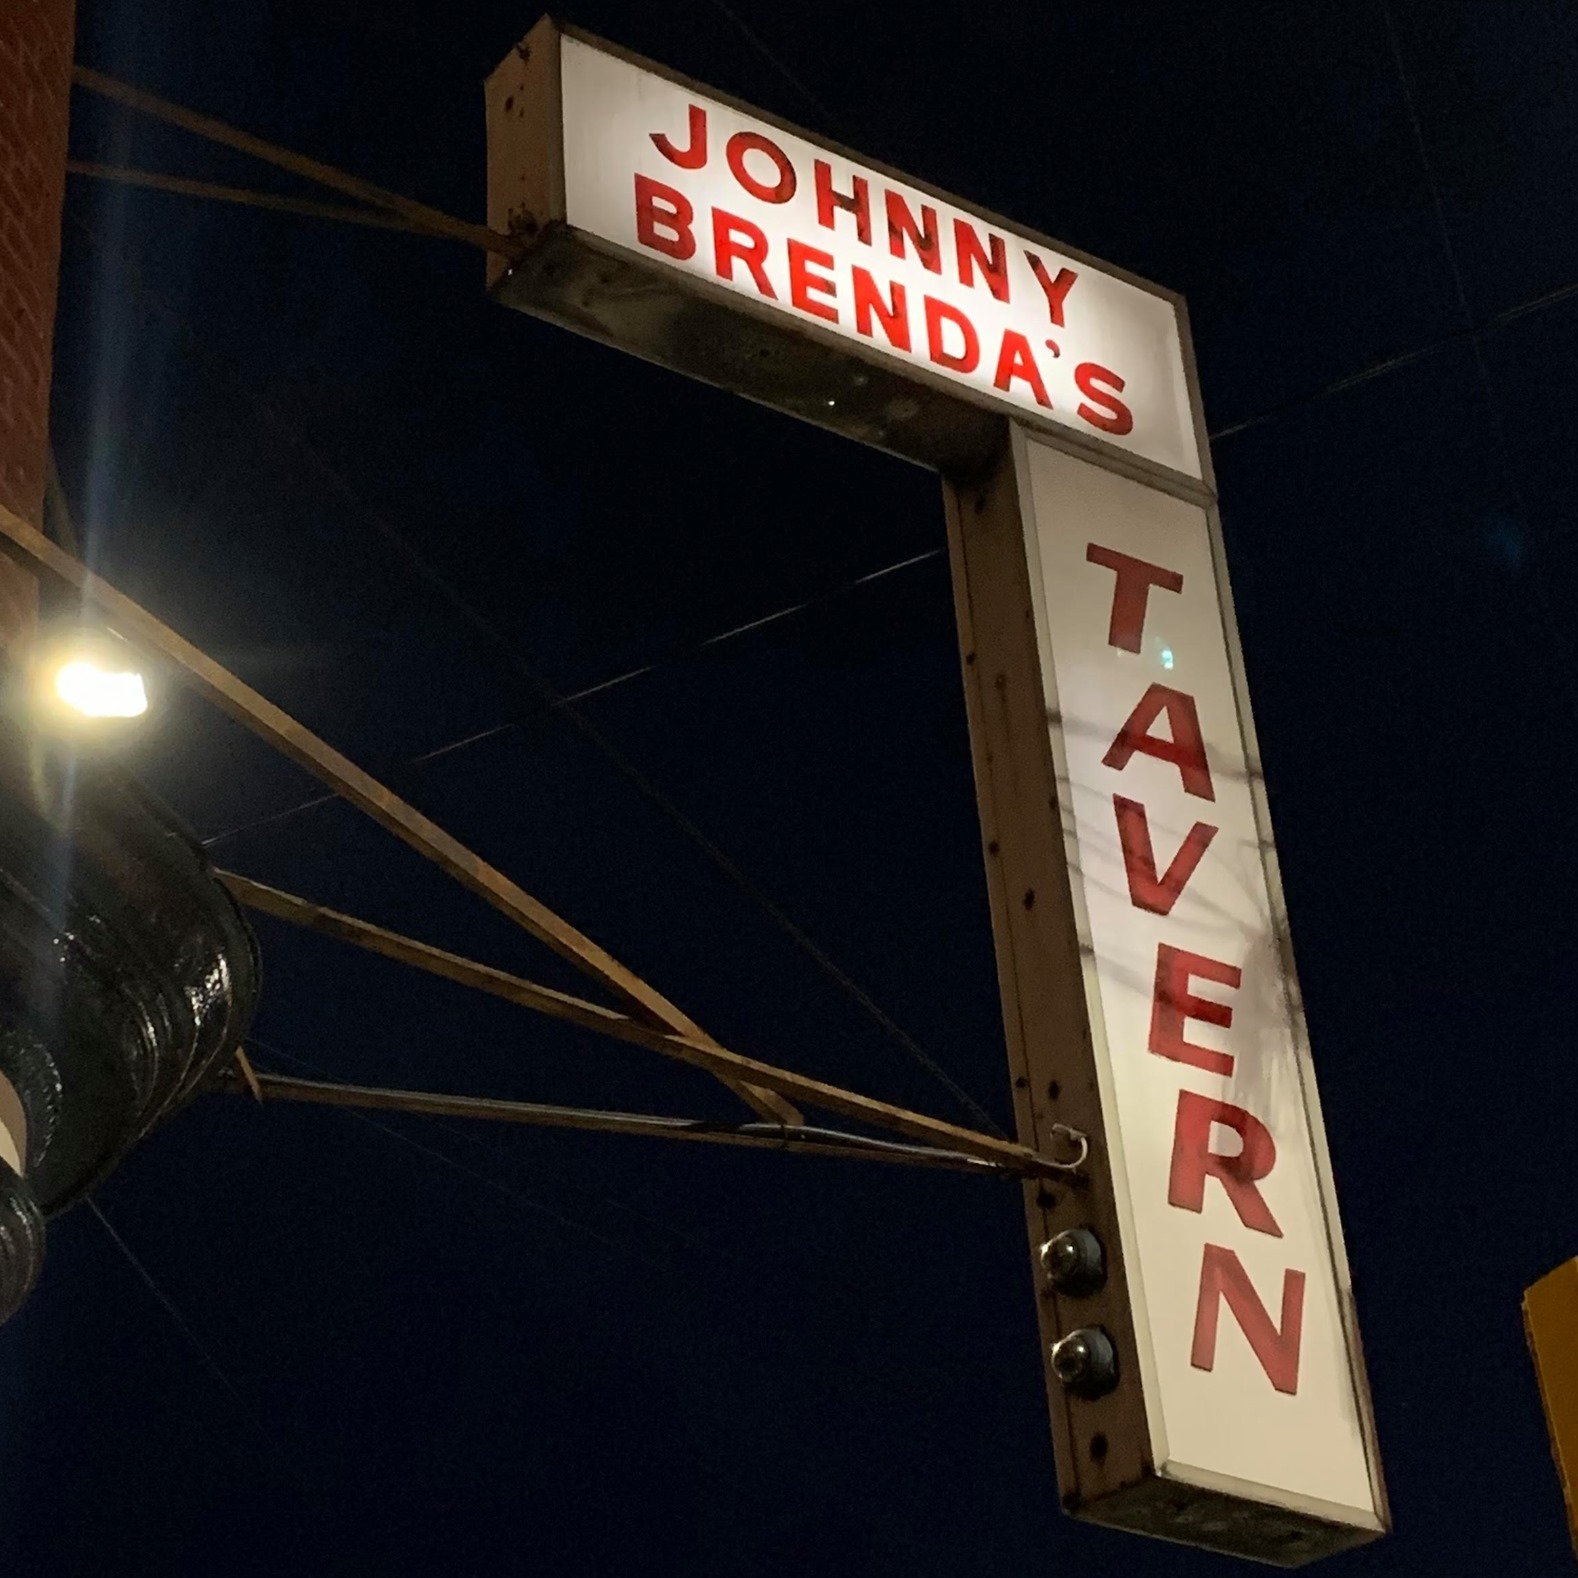 Johnny Brenda's, 1201 North Frankford Ave